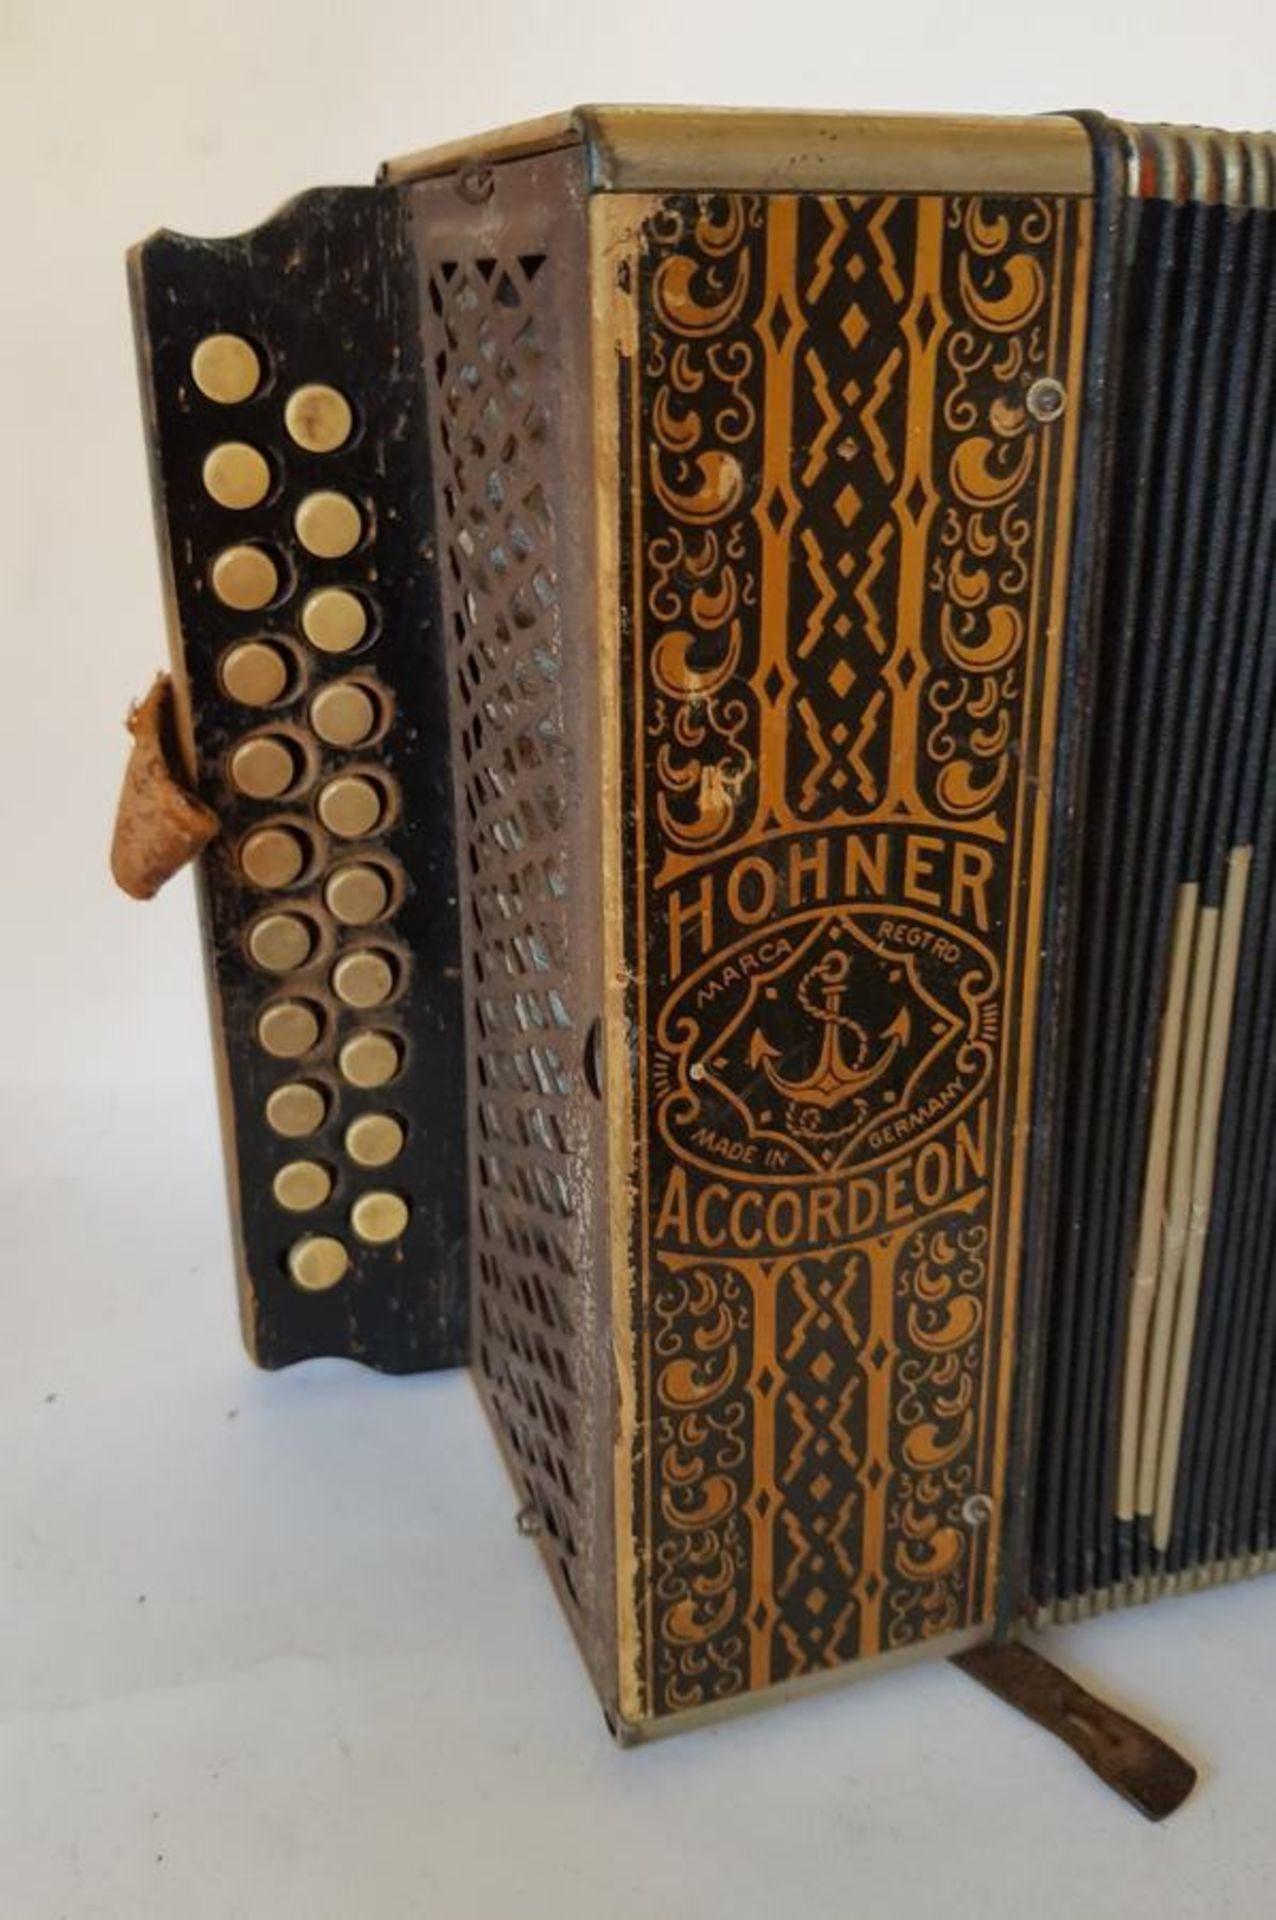 (Muziekinstrumenten) Hohner accordeonHohner accordeon, Marca Registrada, Duitsland, in koffer, circa - Bild 4 aus 5